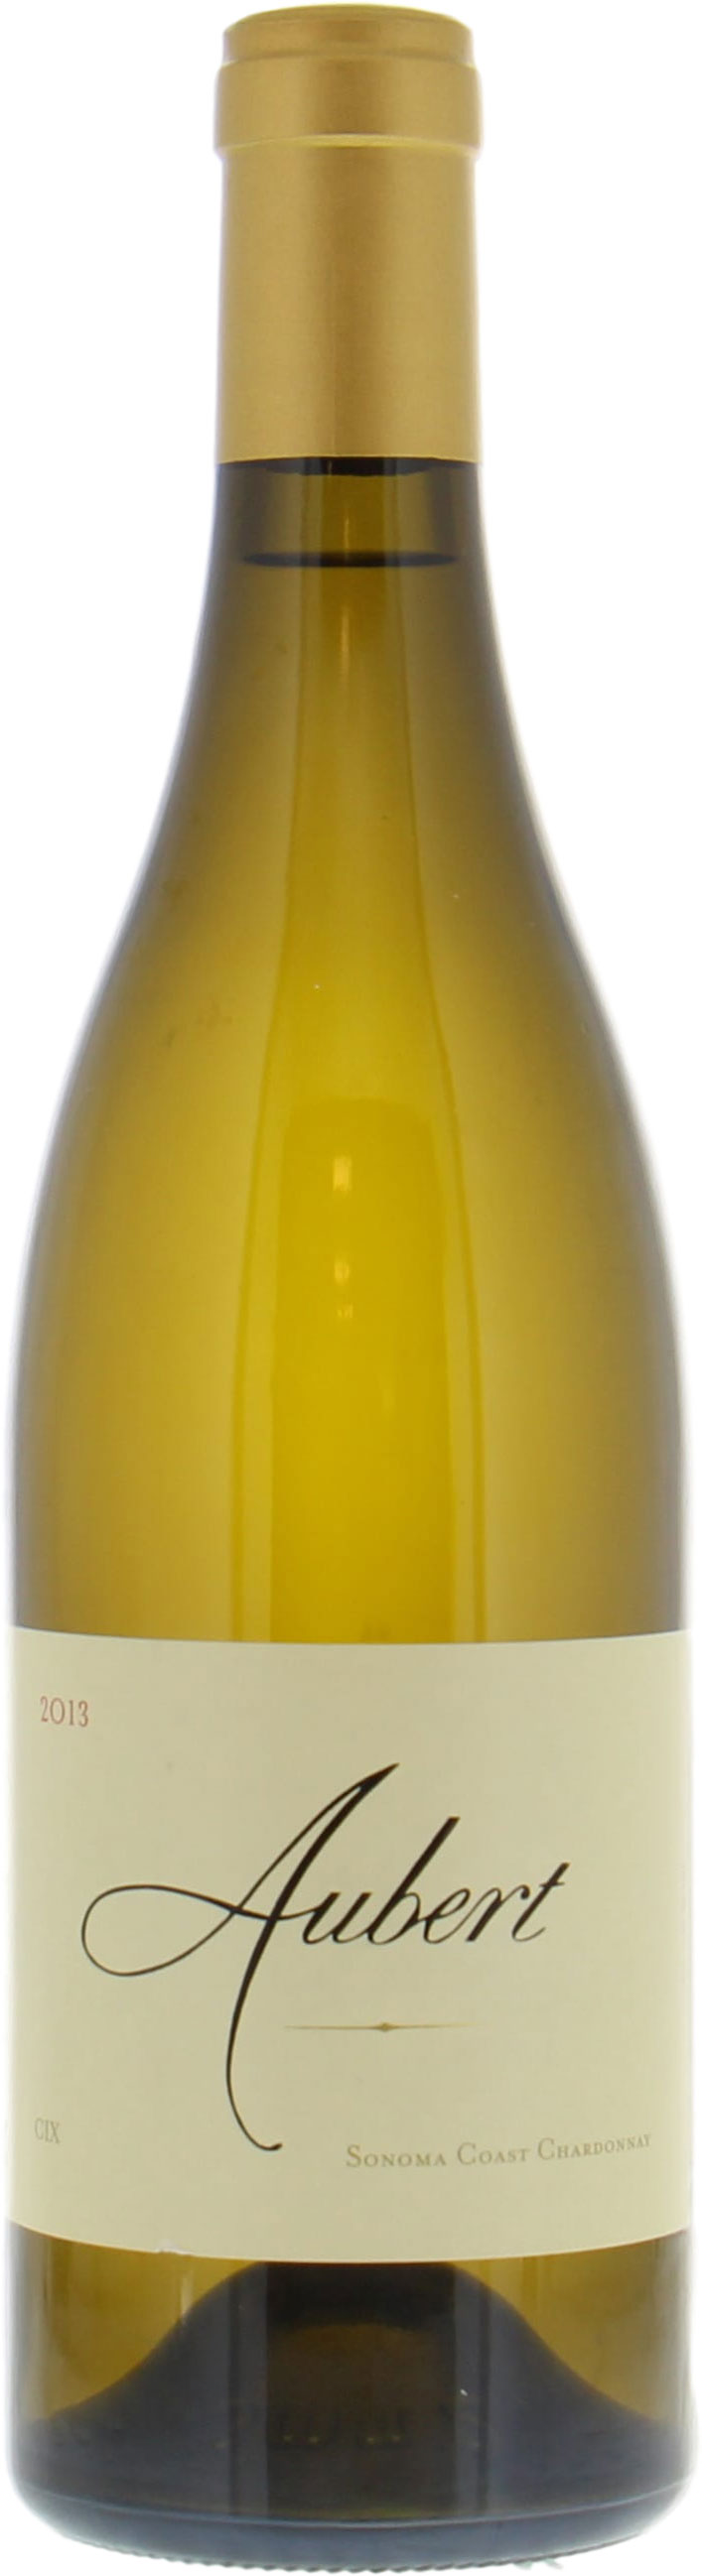 Aubert - CIX Chardonnay 2013 Perfect